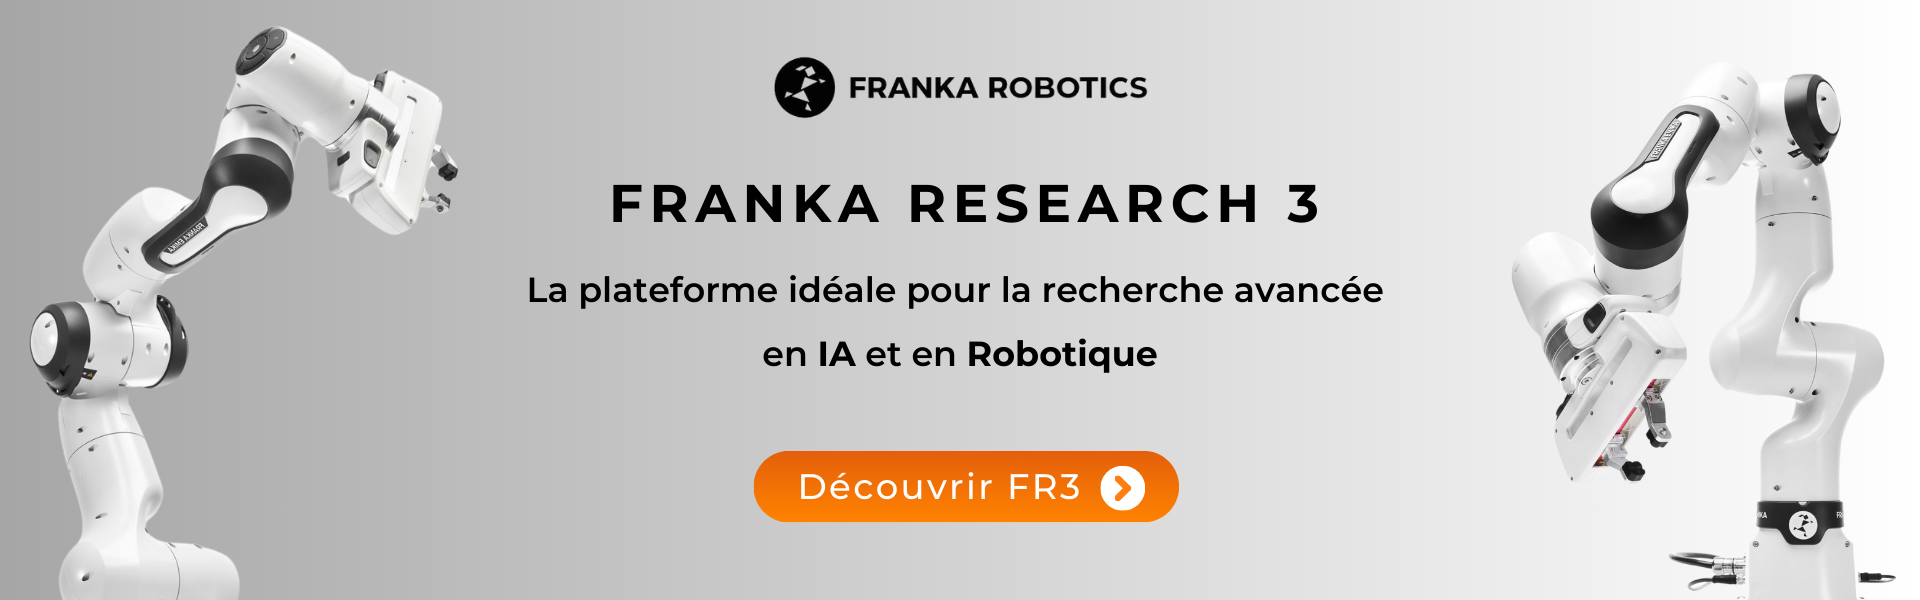 Bannière Franka Research 3